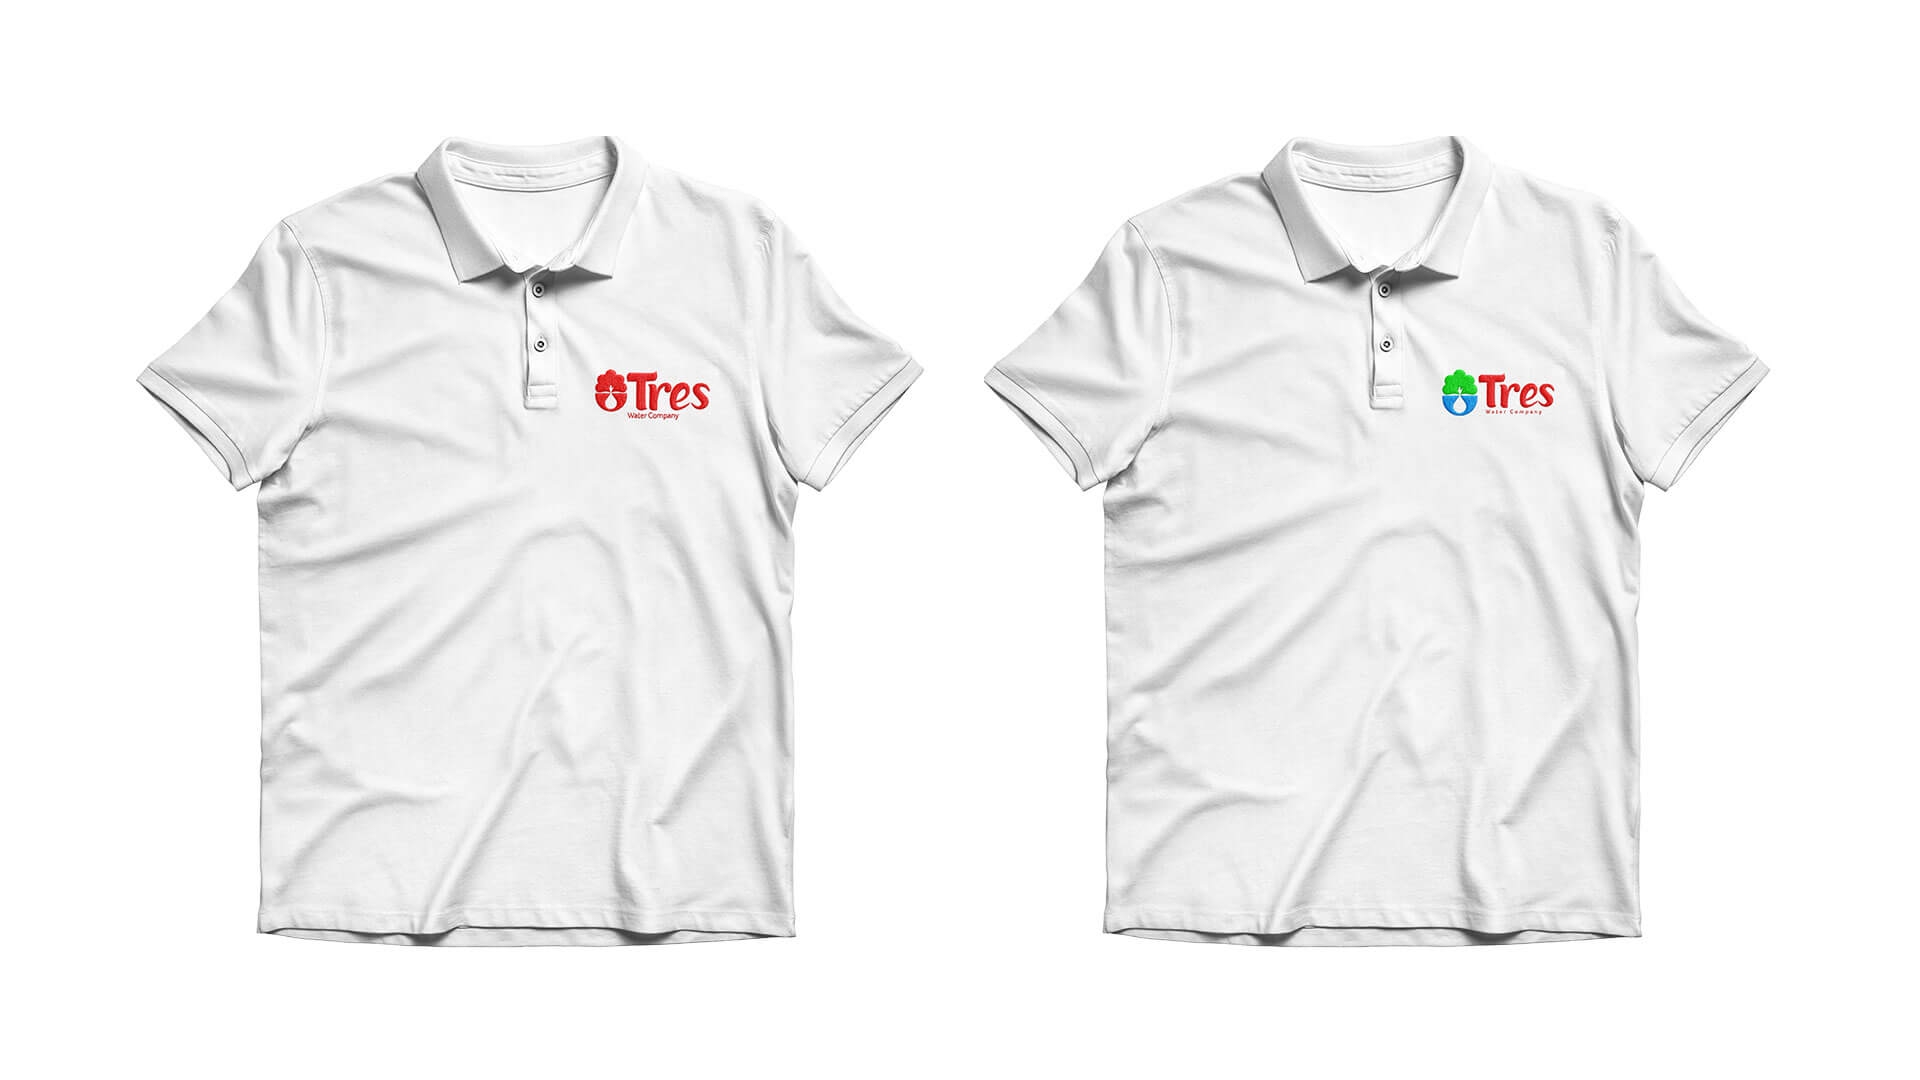 Tres Water Company - Polo shirt - Uniform design